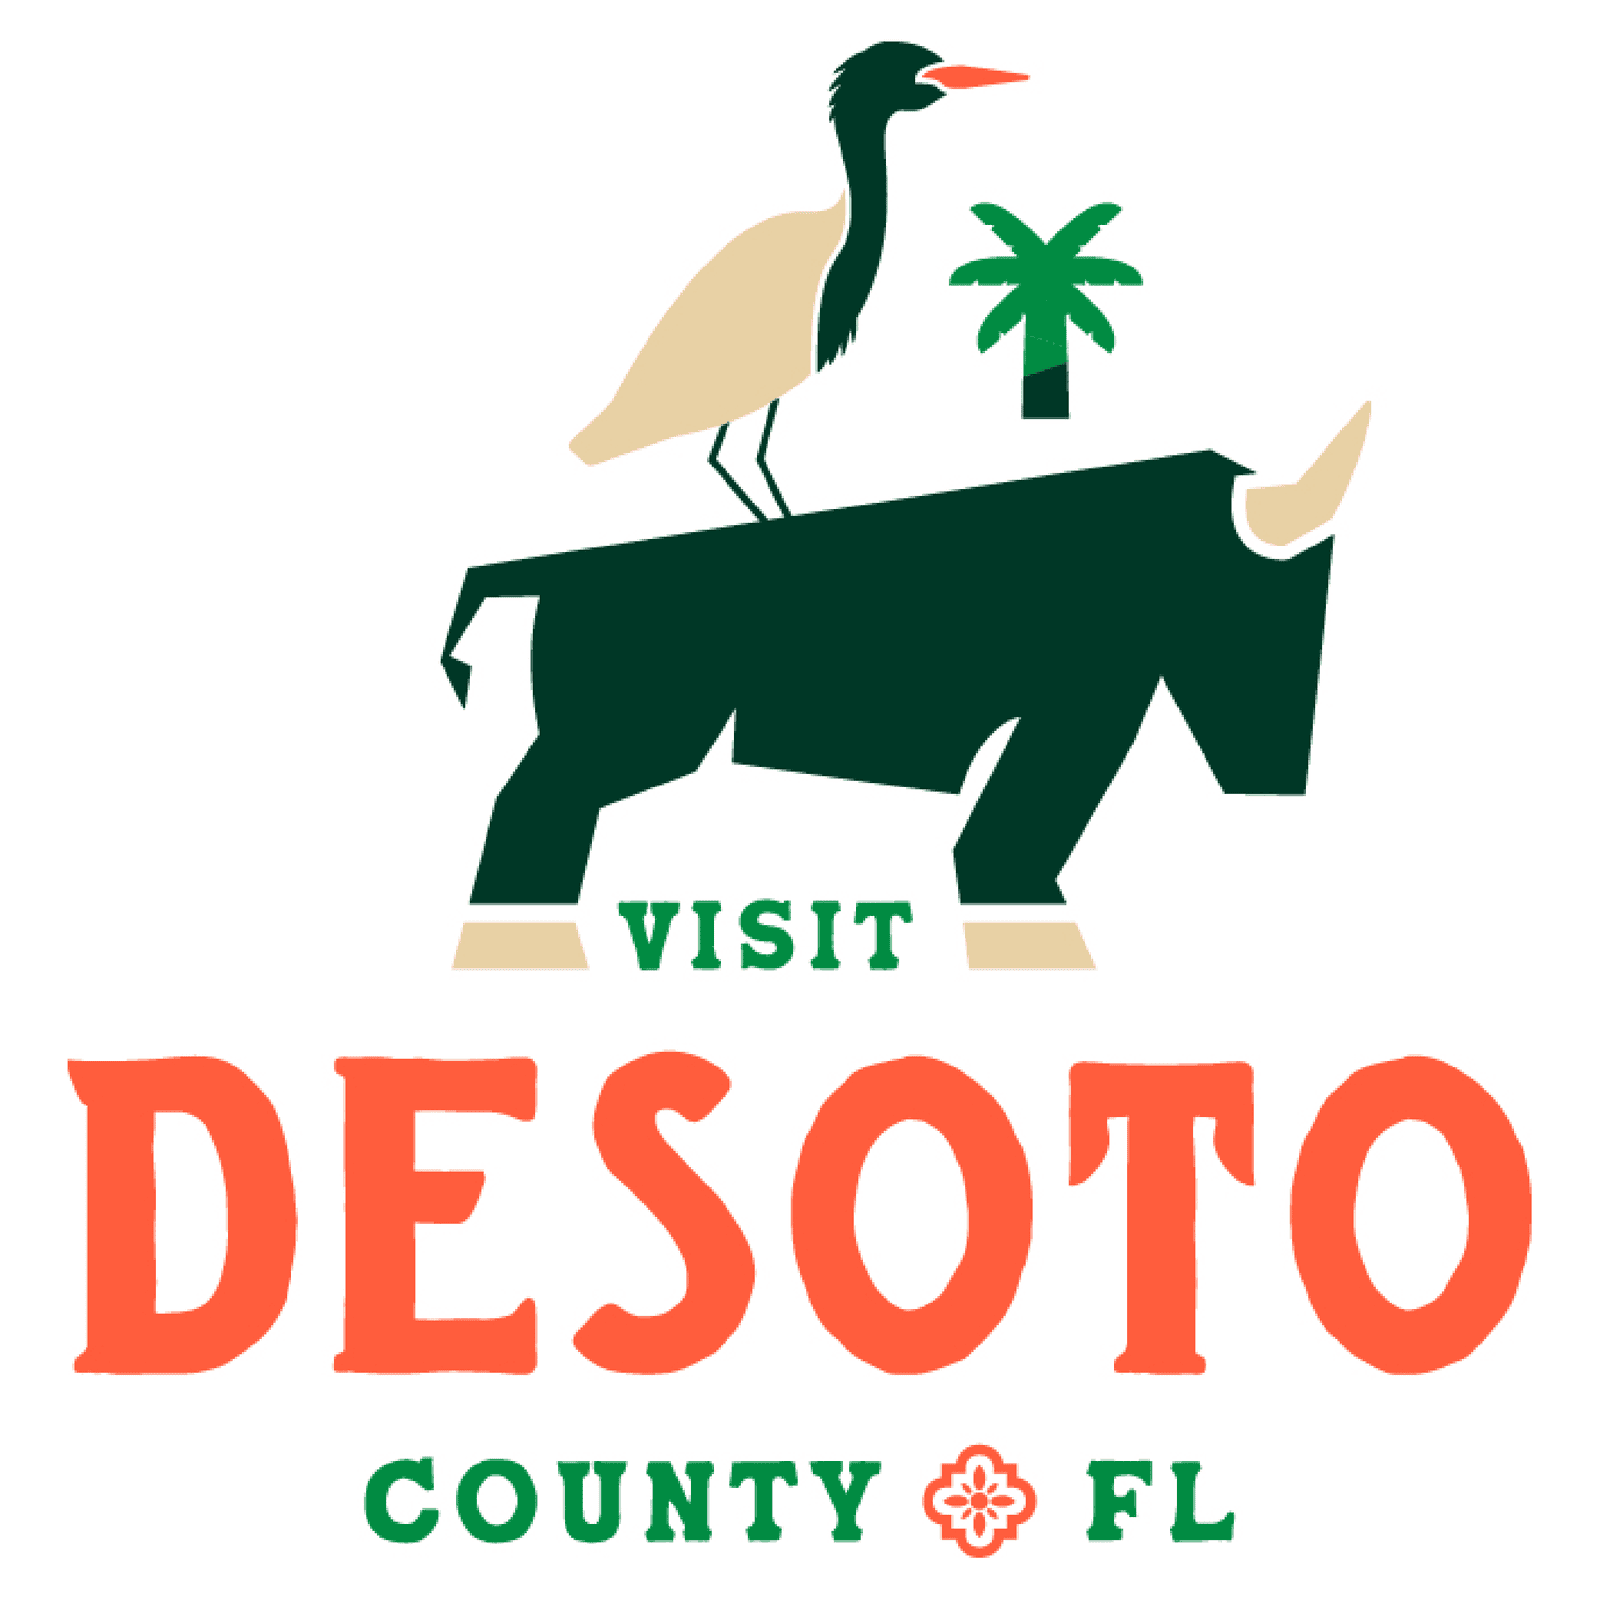 Visit DeSoto County FL